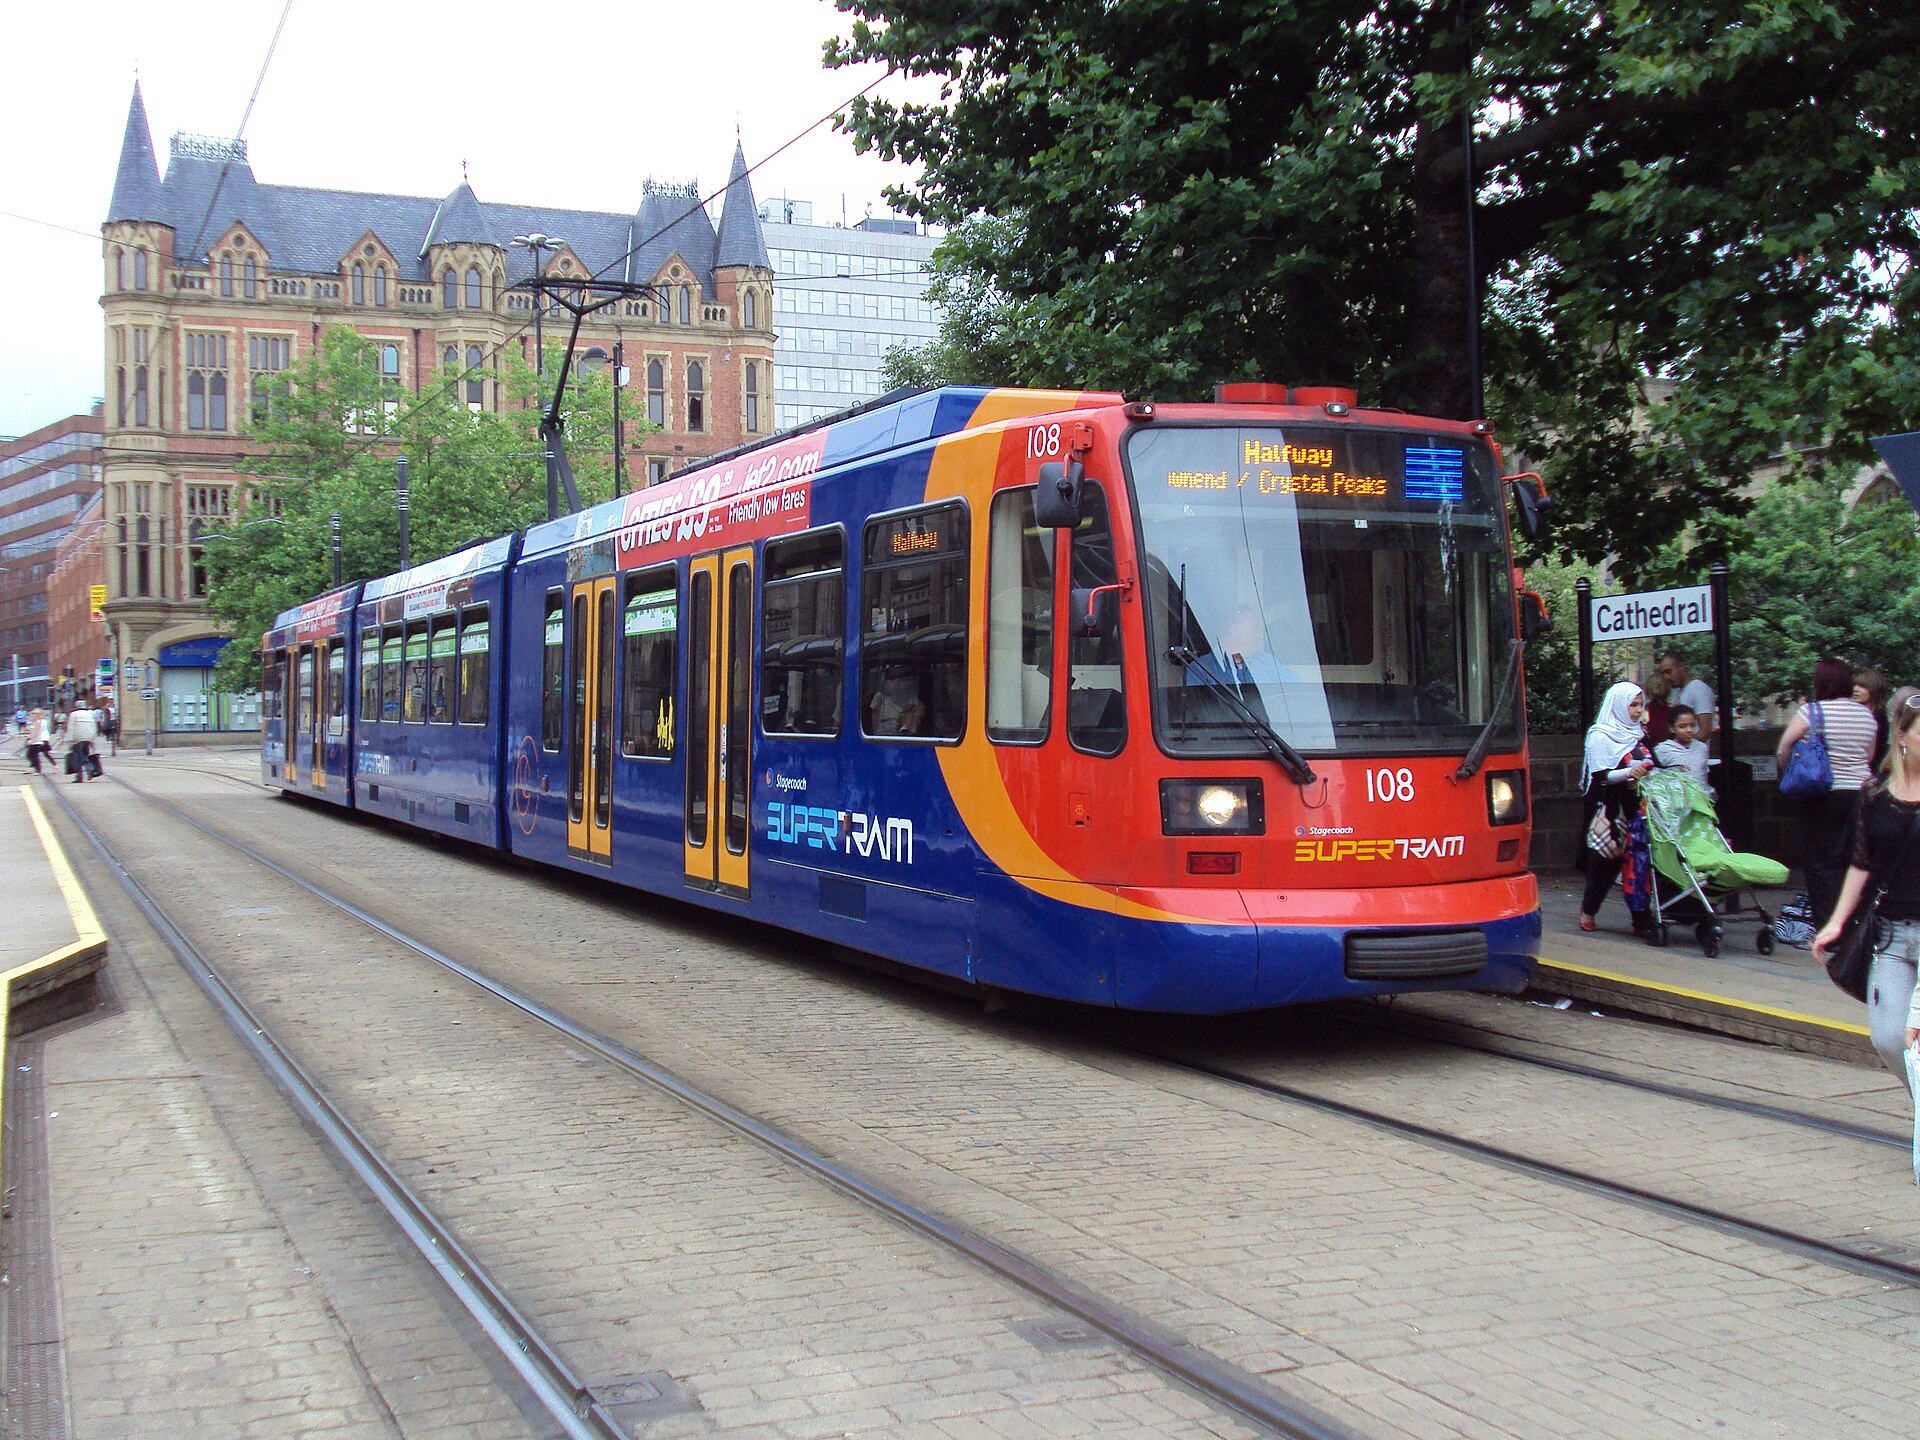 Sheffield supertram at Cathedral stop - DSC07446.JPG